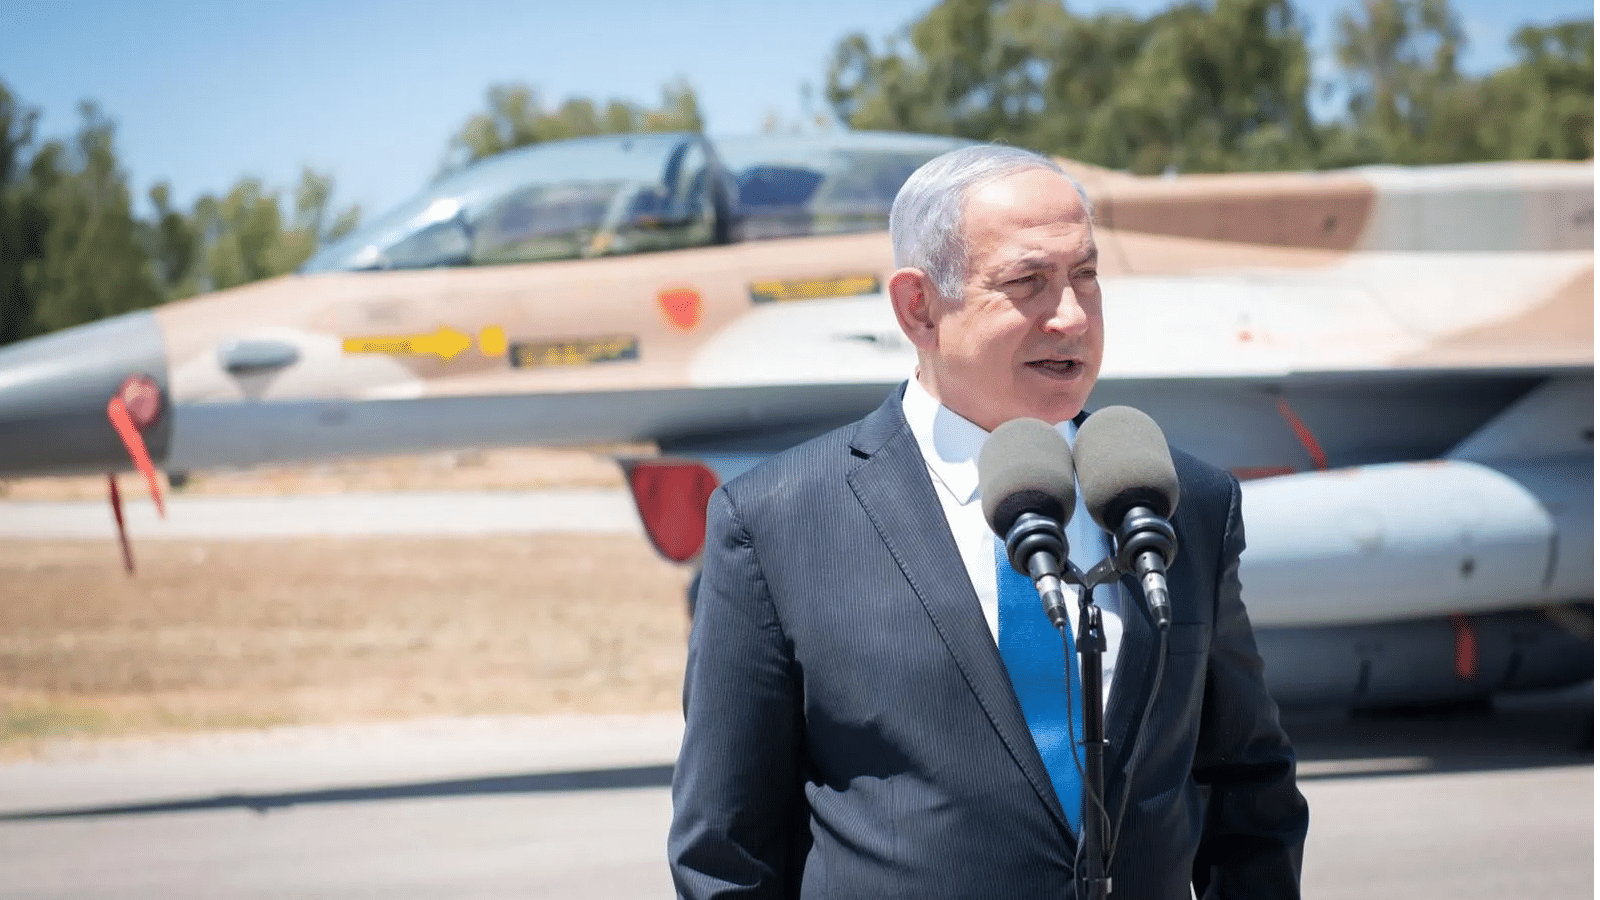 Benjamin Netanyahu’s premiership attracts protests ahead of election